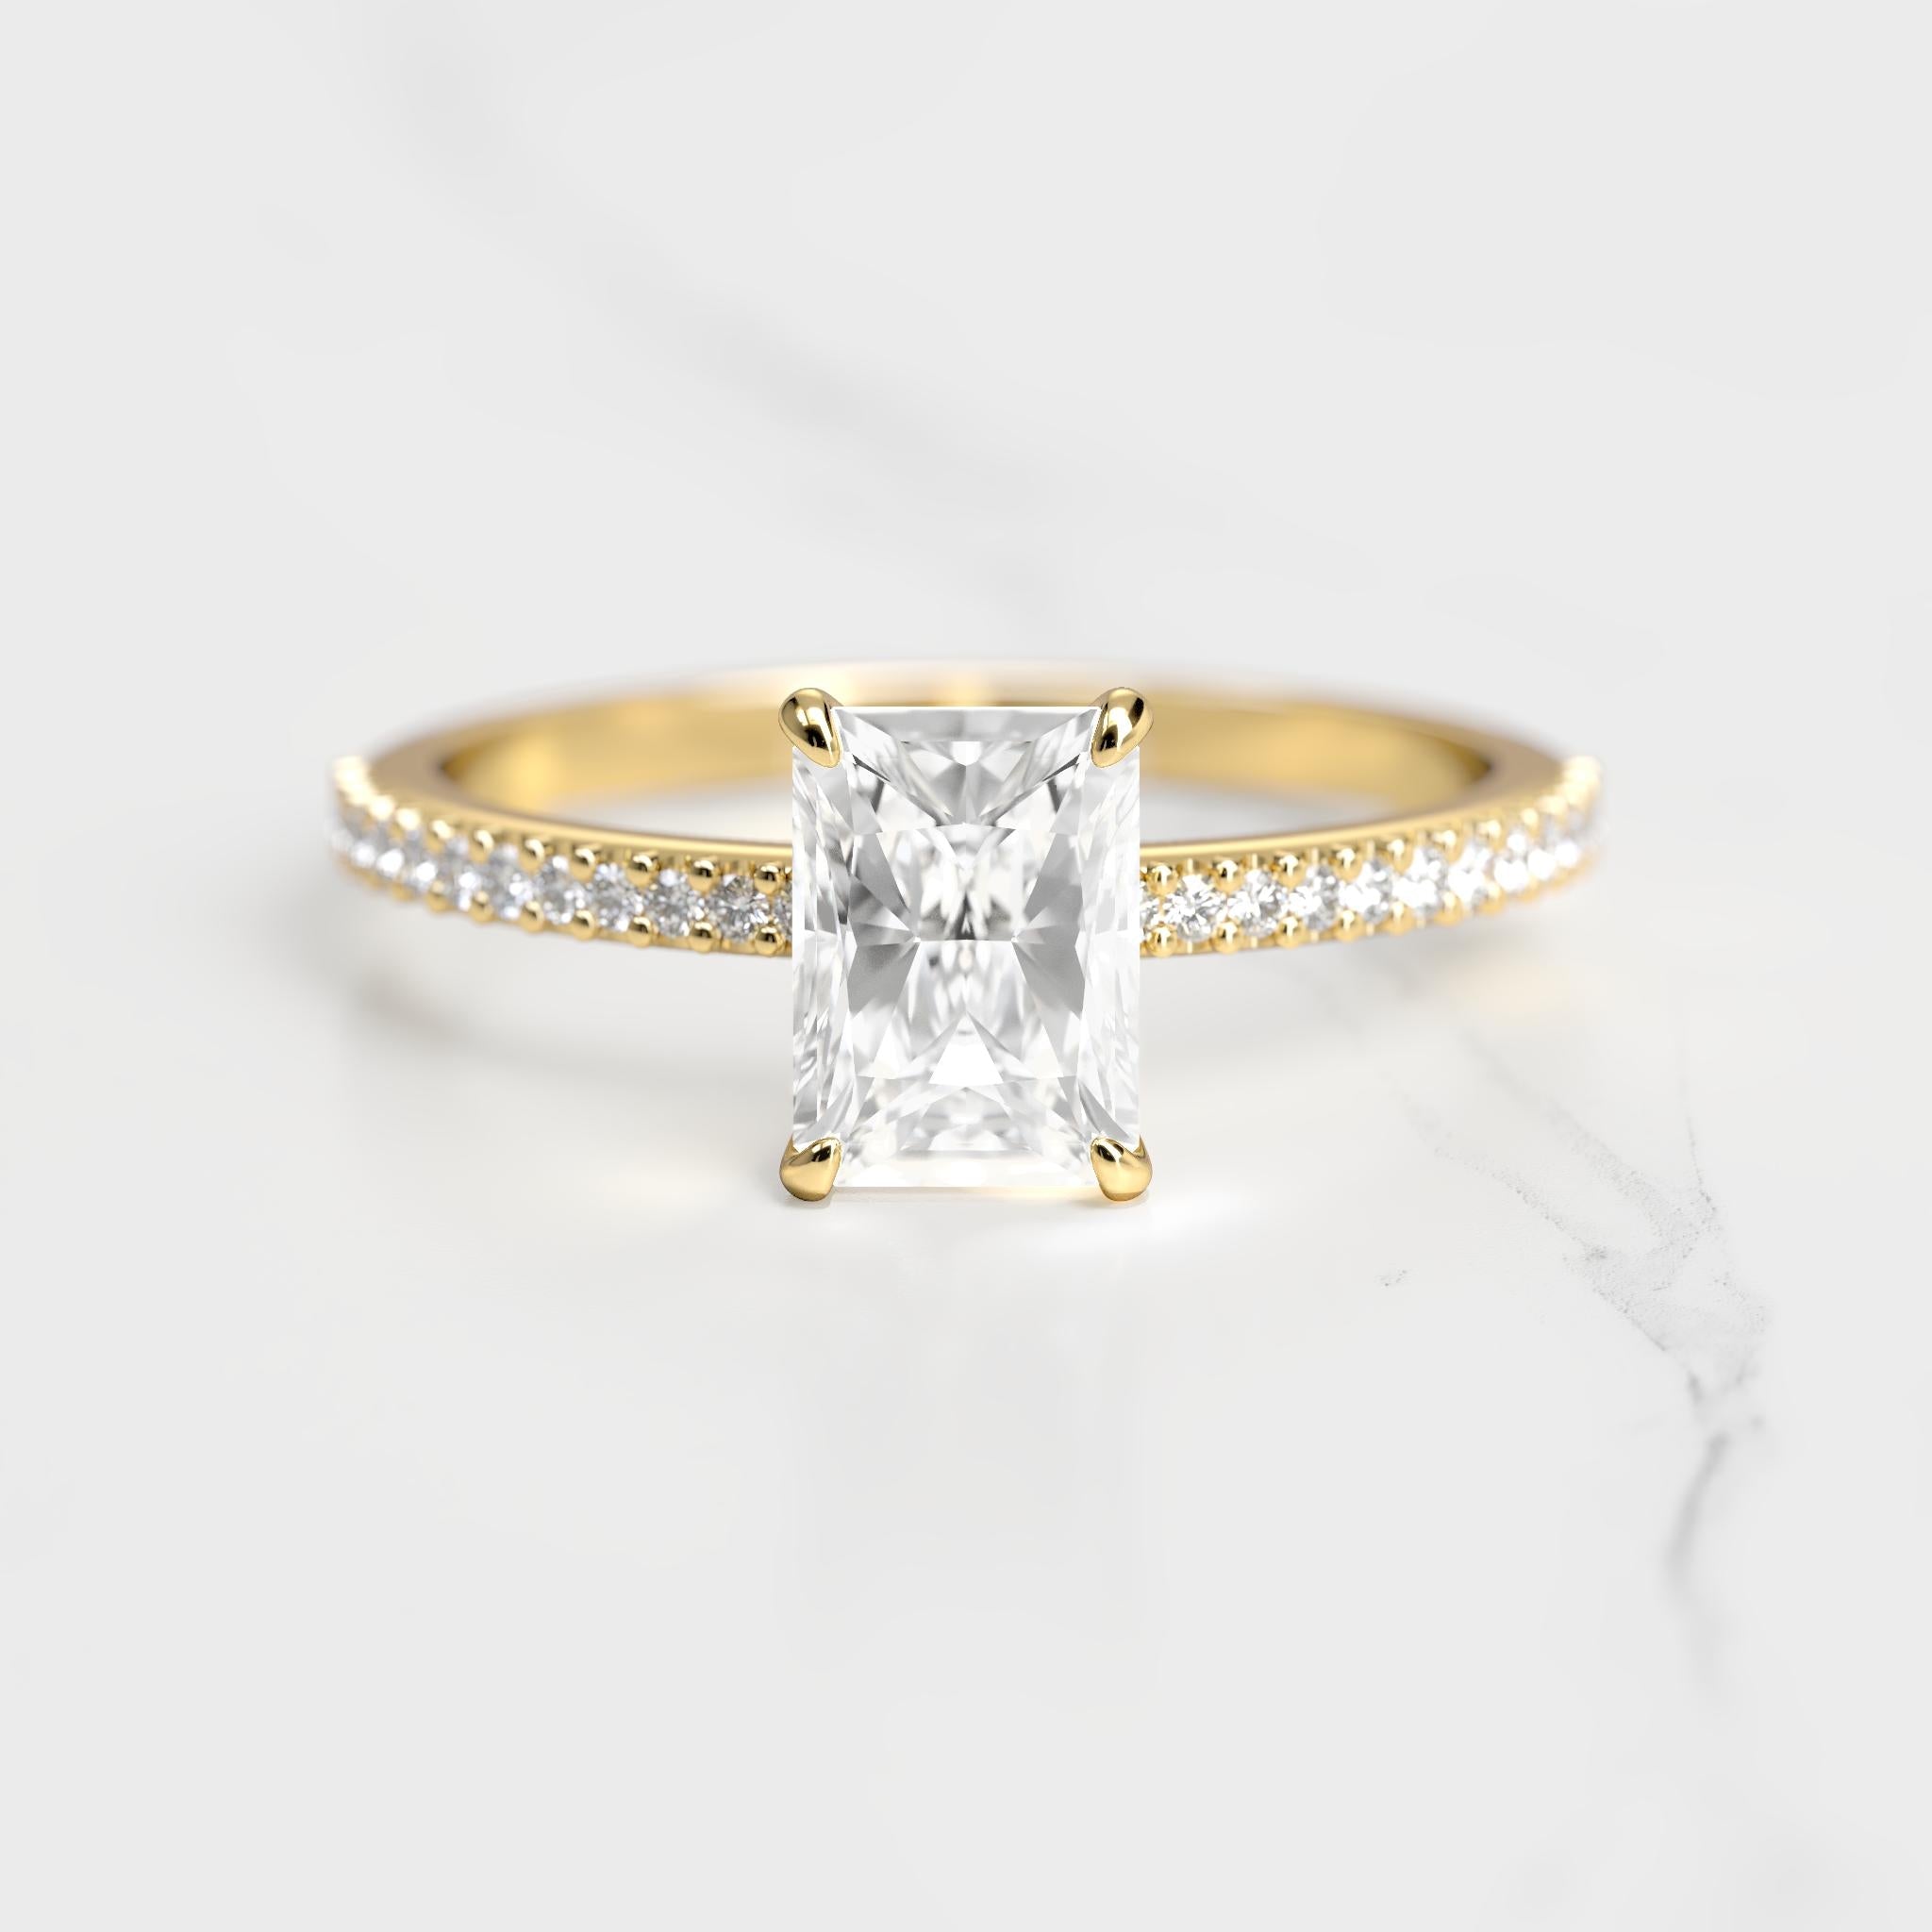 RADIANT HALF PAVE DIAMOND RING - 18k yellow gold / 1ct / lab diamond